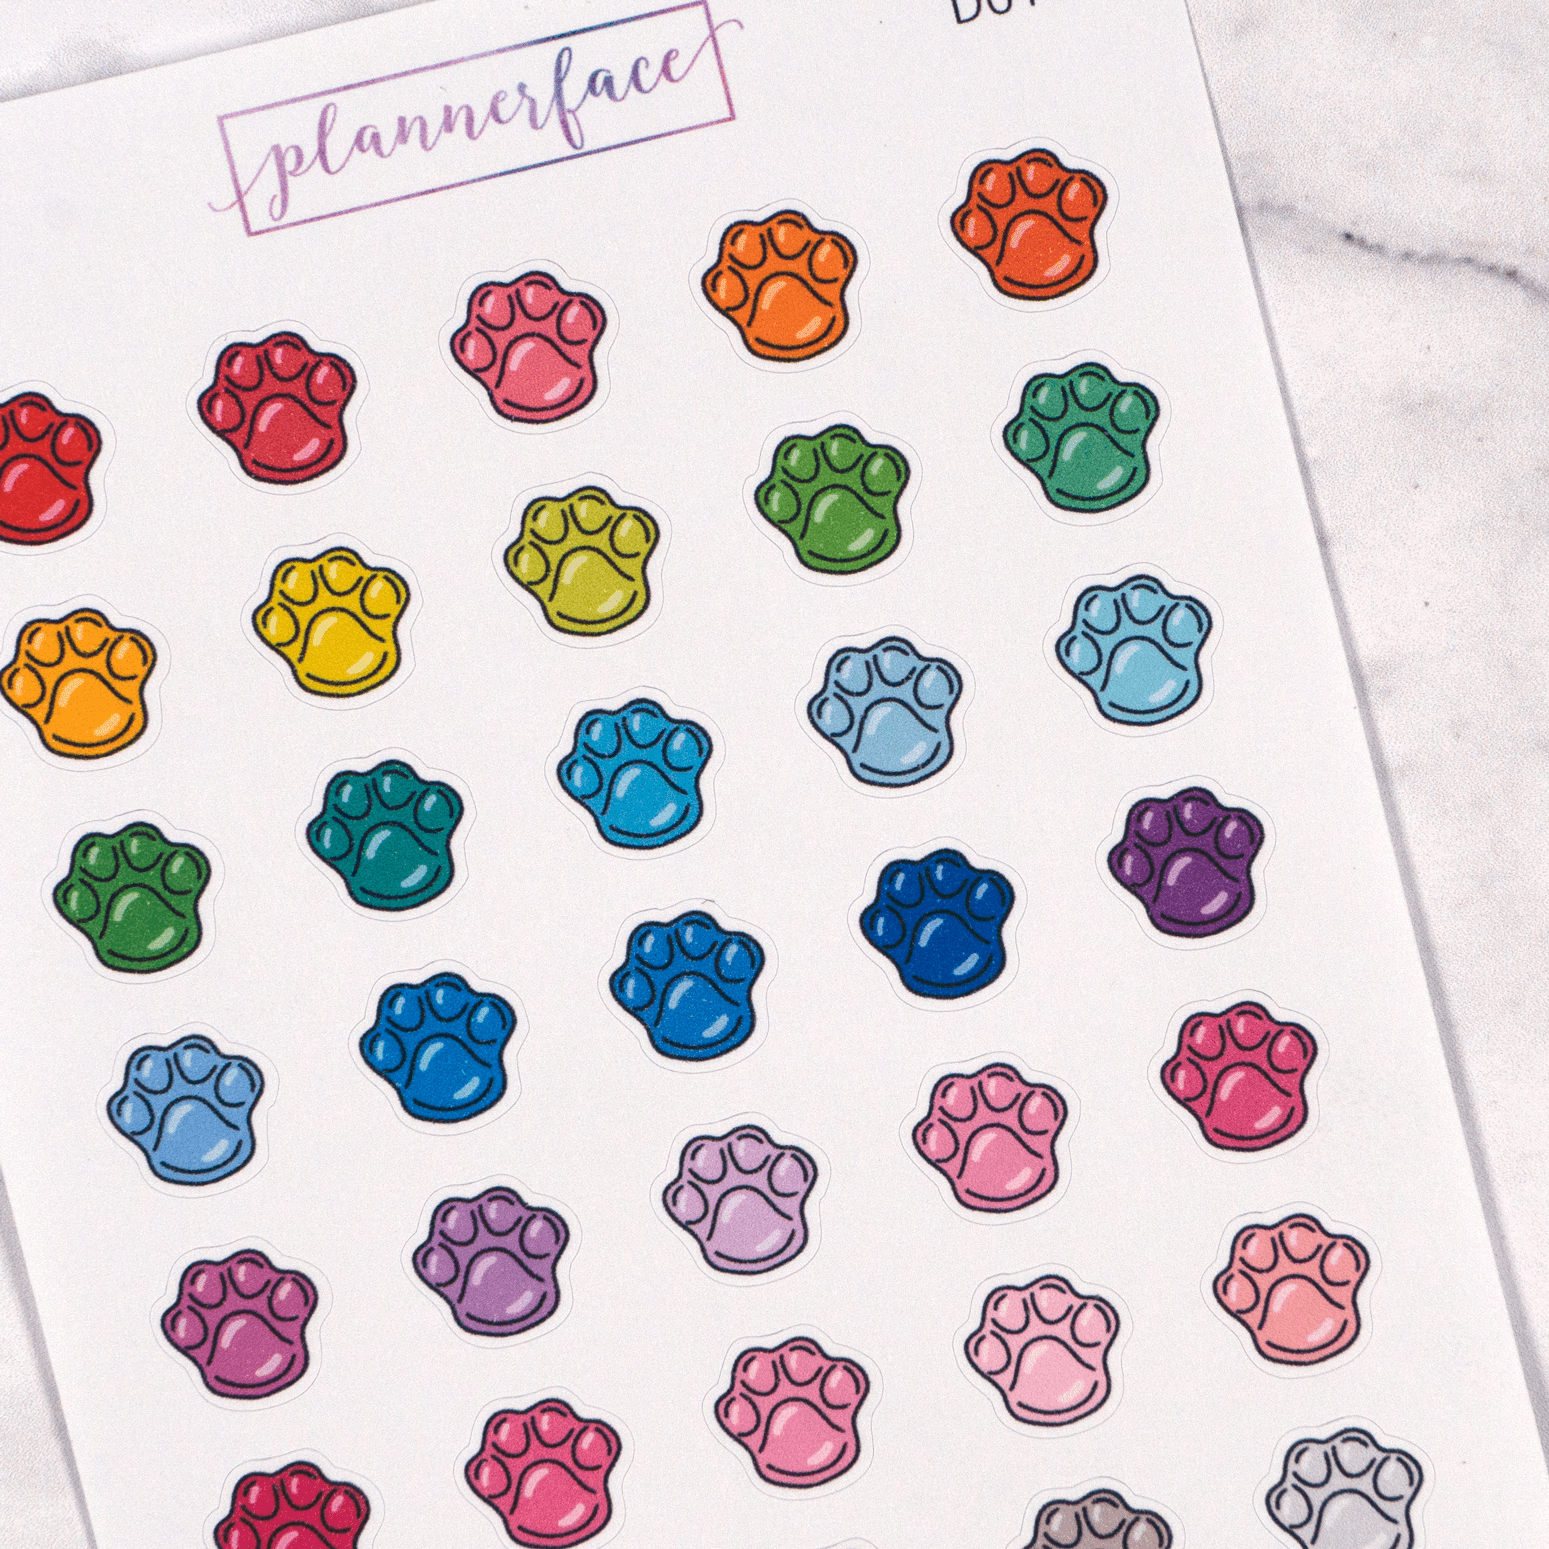 Paw Print Multicolour Doodles by Plannerface